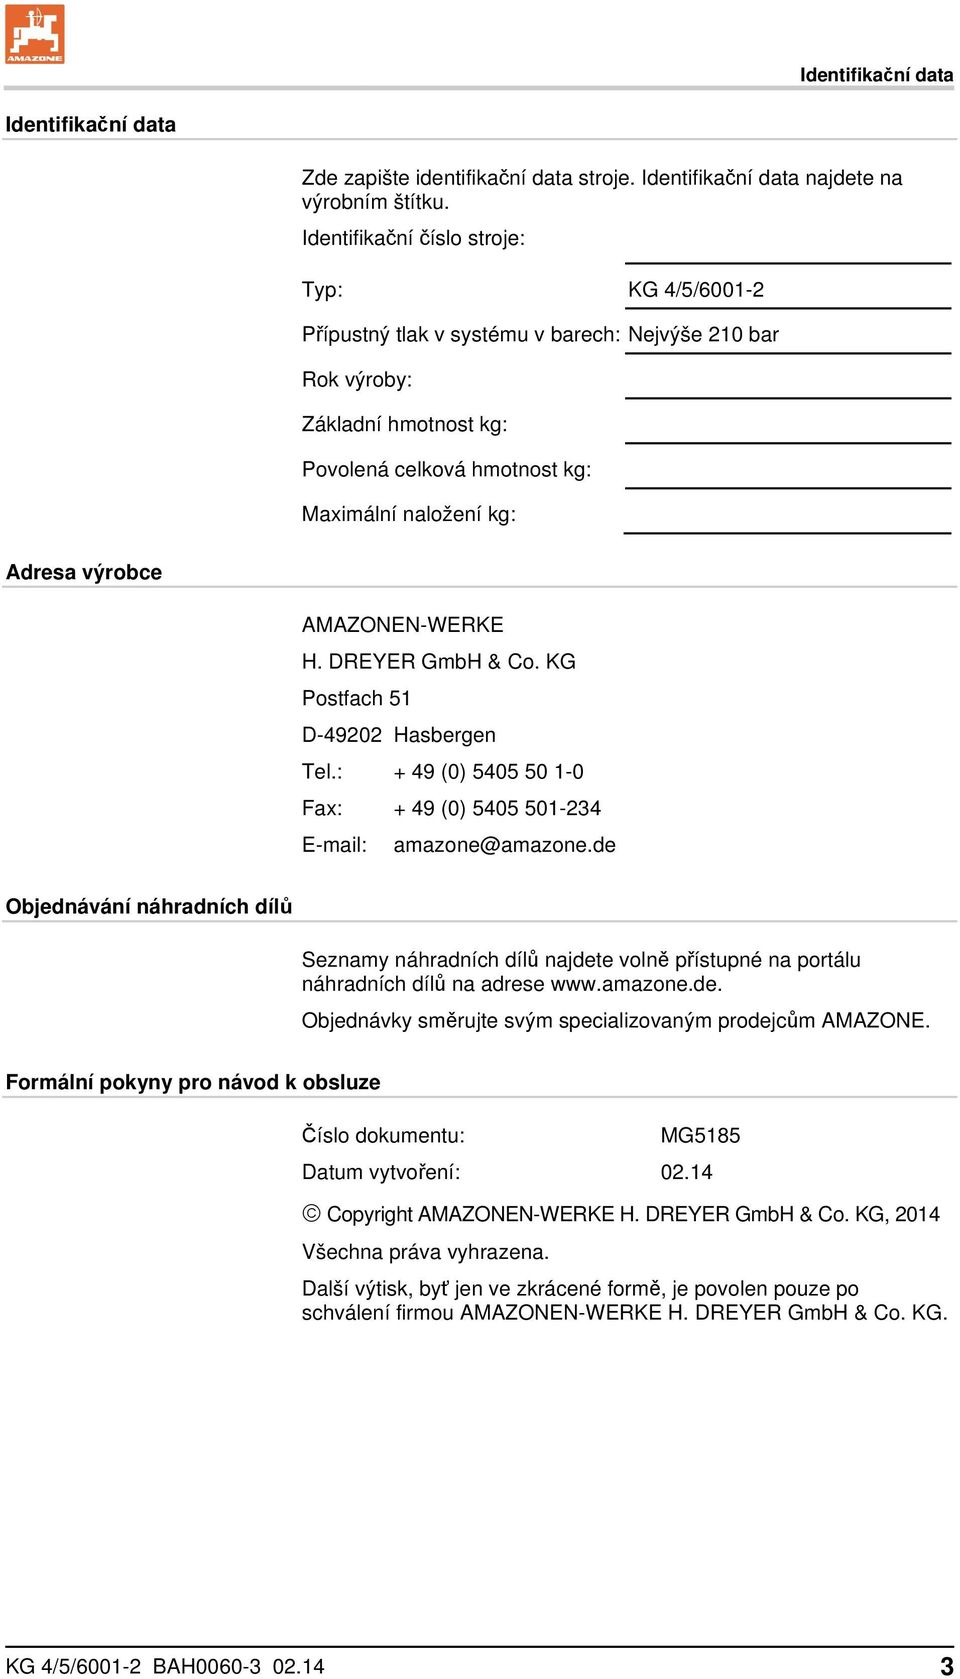 AMAZONEN-WERKE H. DREYER GmbH & Co. KG Postfach 51 D-49202 Hasbergen Tel.: + 49 (0) 5405 50 1-0 Fax: + 49 (0) 5405 501-234 E-mail: amazone@amazone.